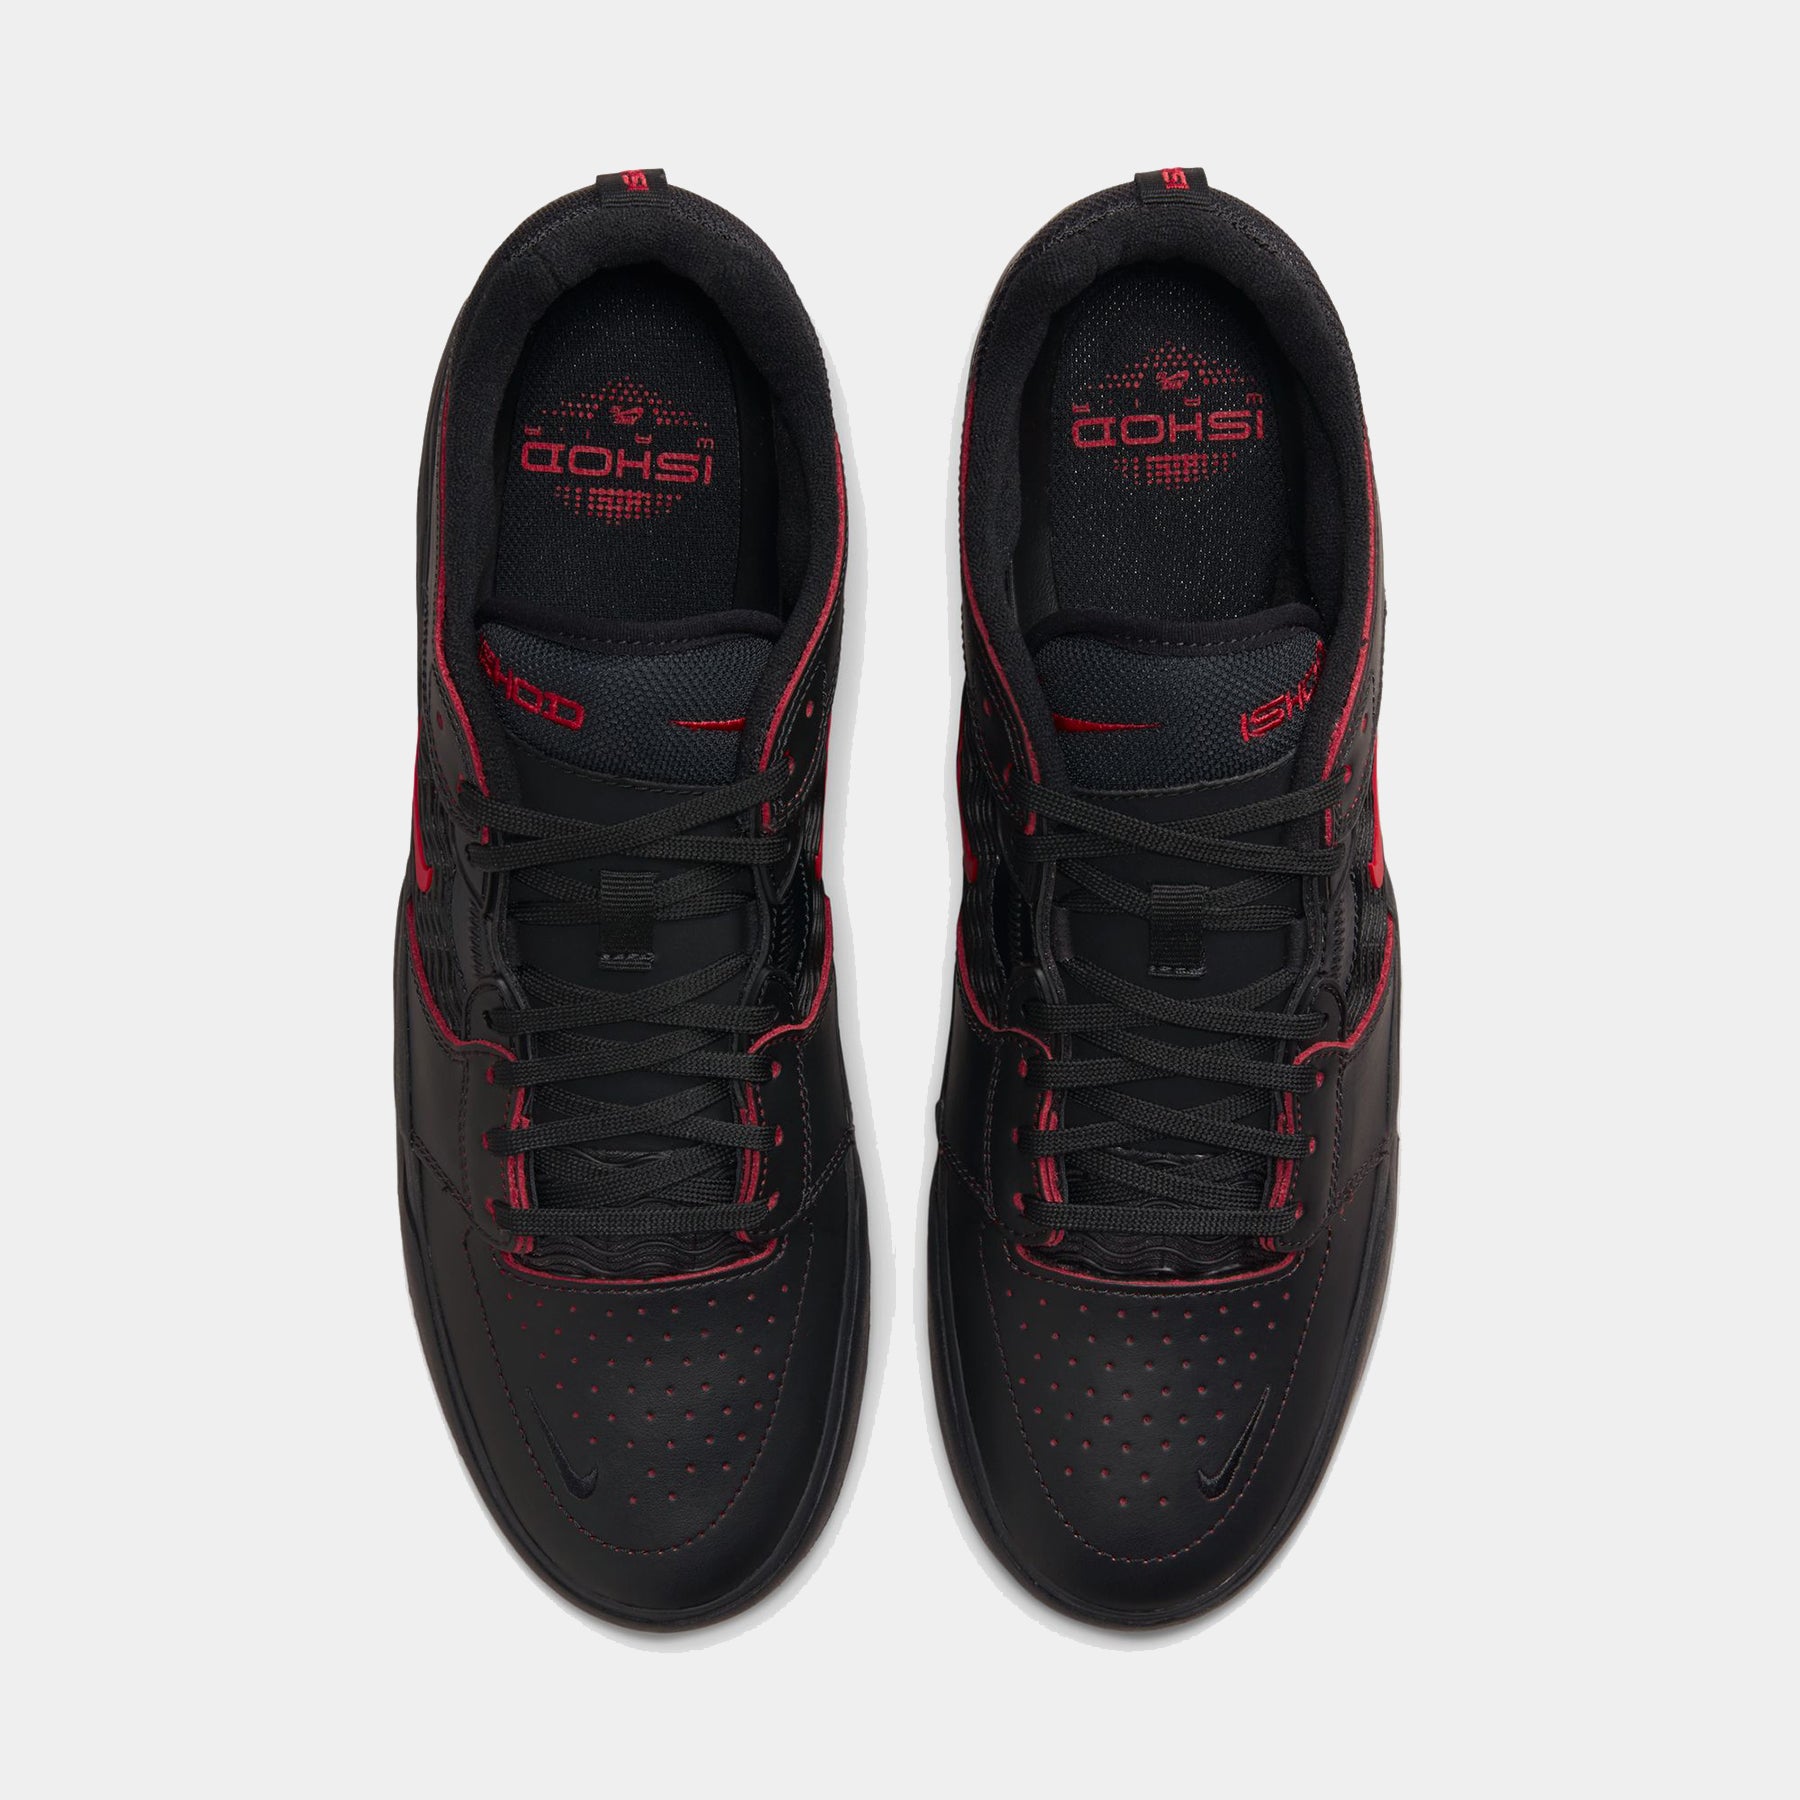 Nike SB - Ishod Prm - Black/University Red